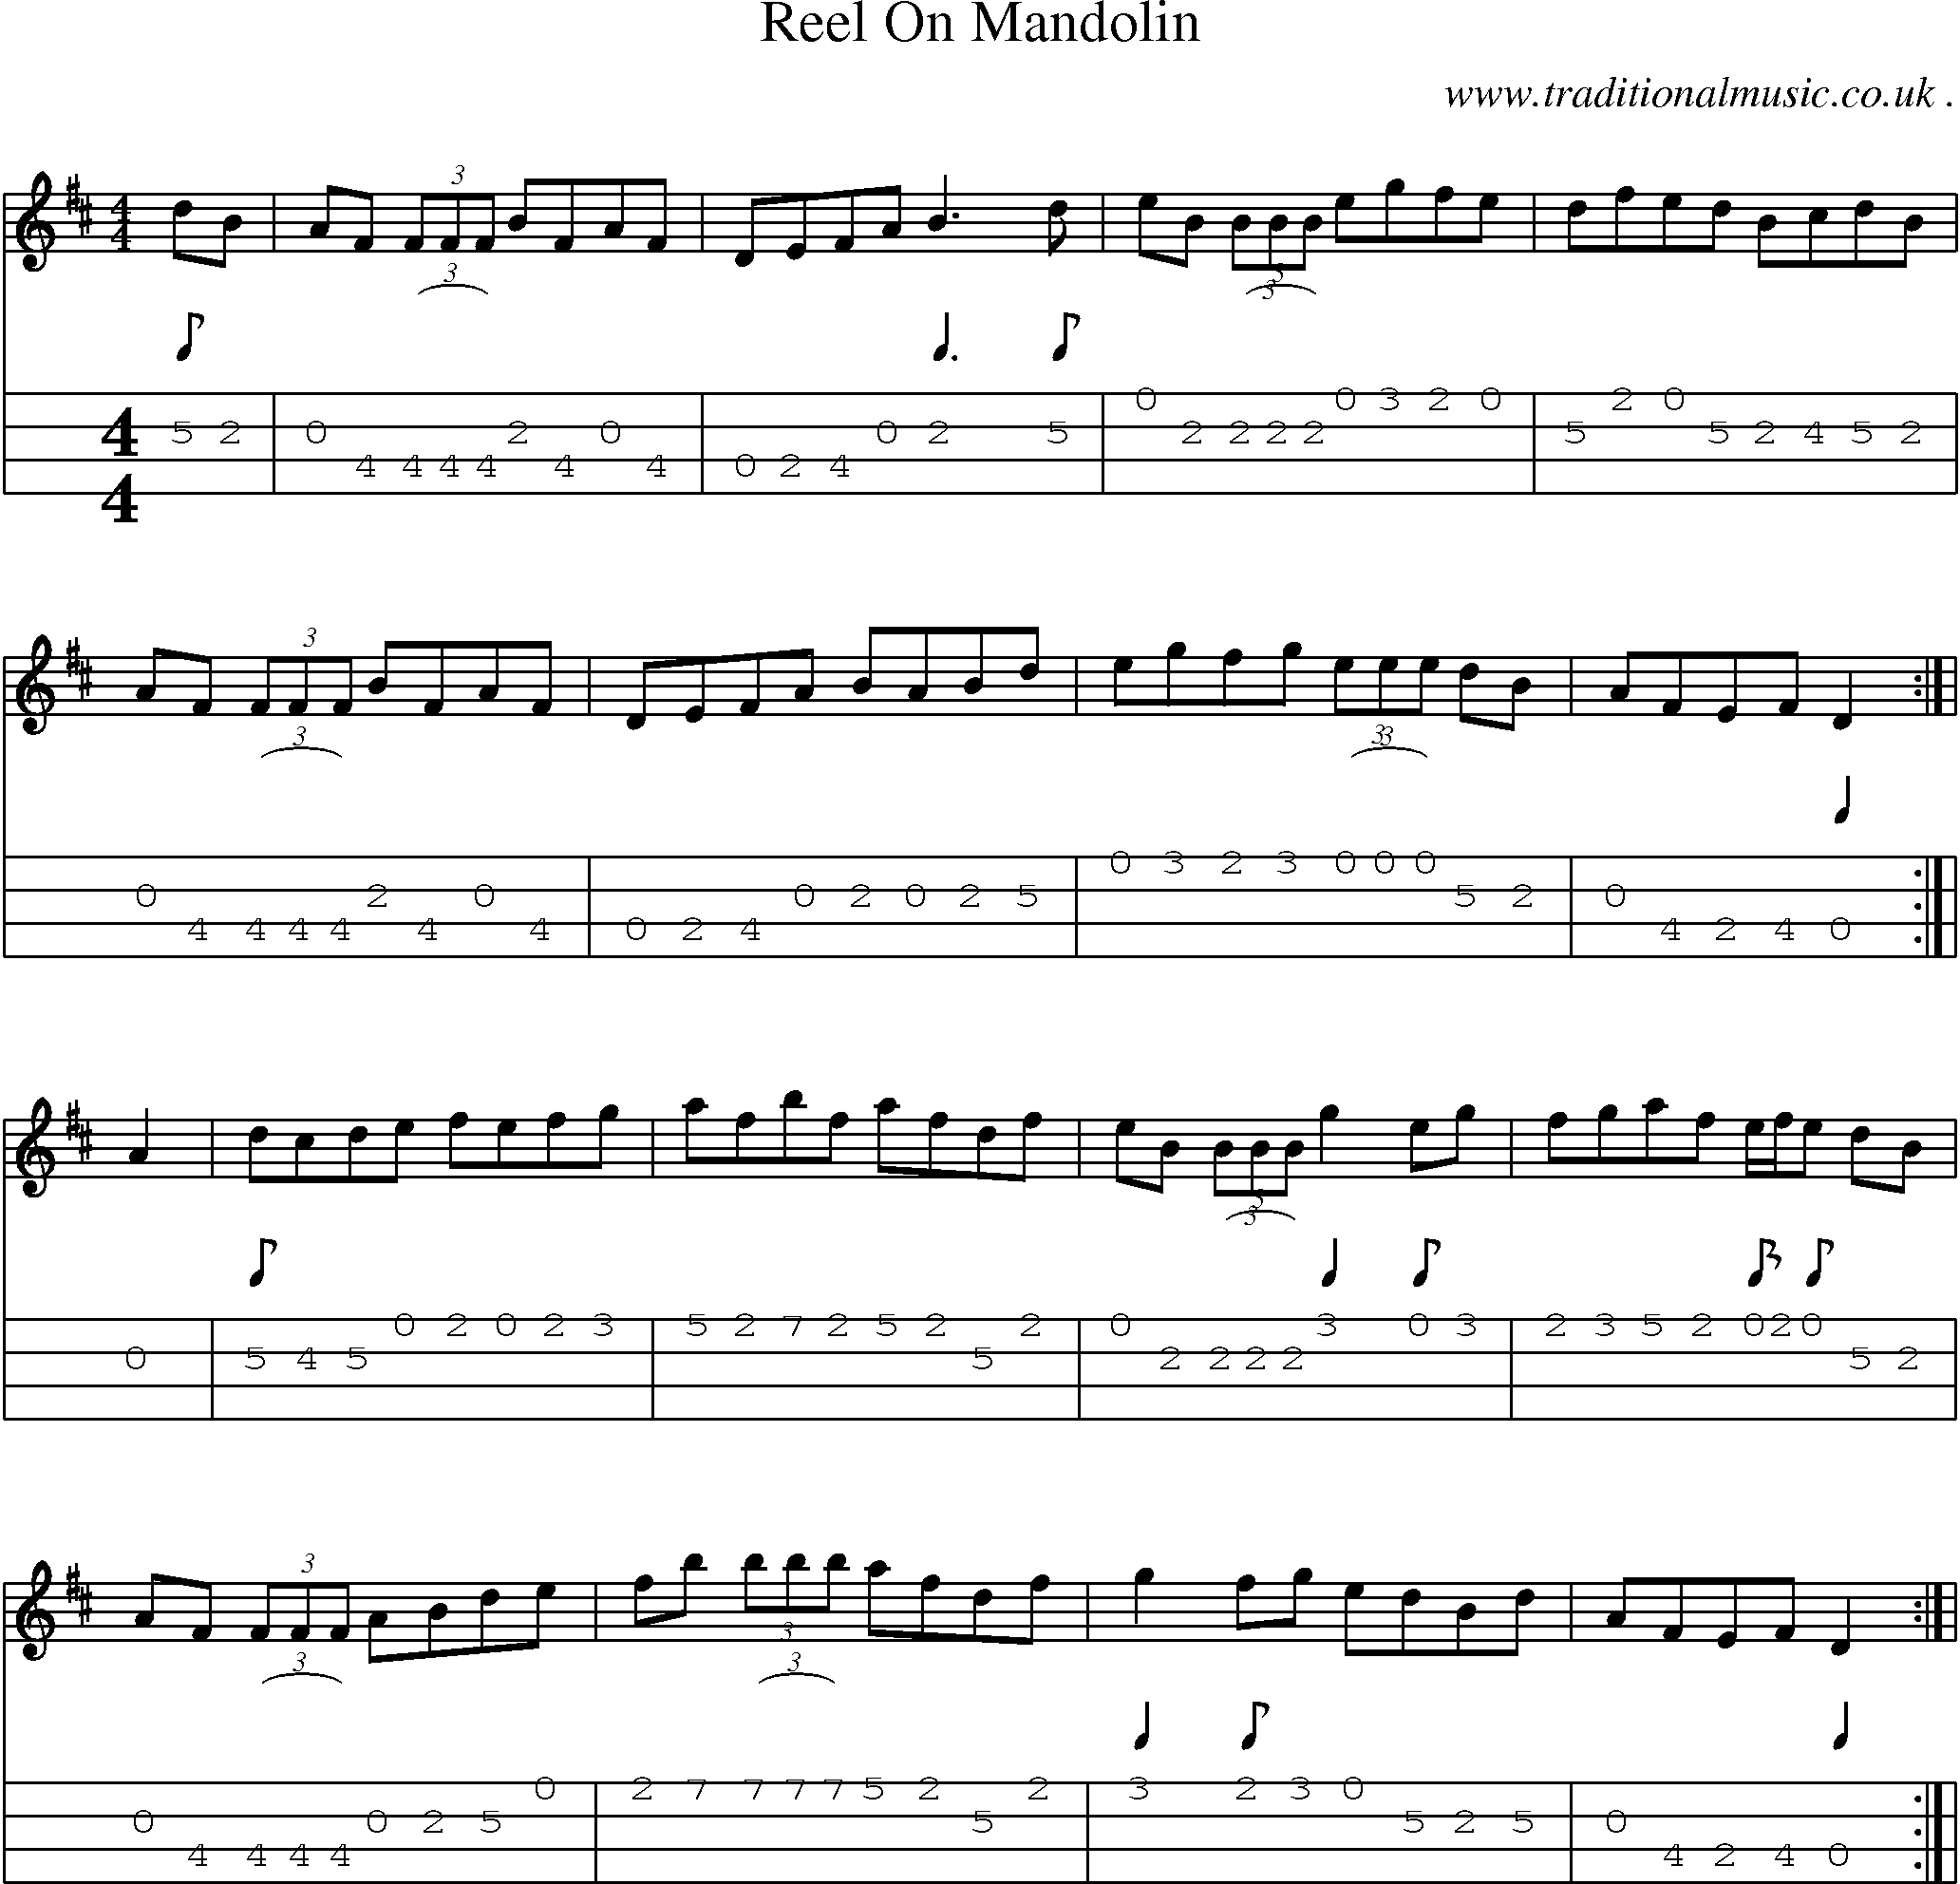 Sheet-Music and Mandolin Tabs for Reel On Mandolin